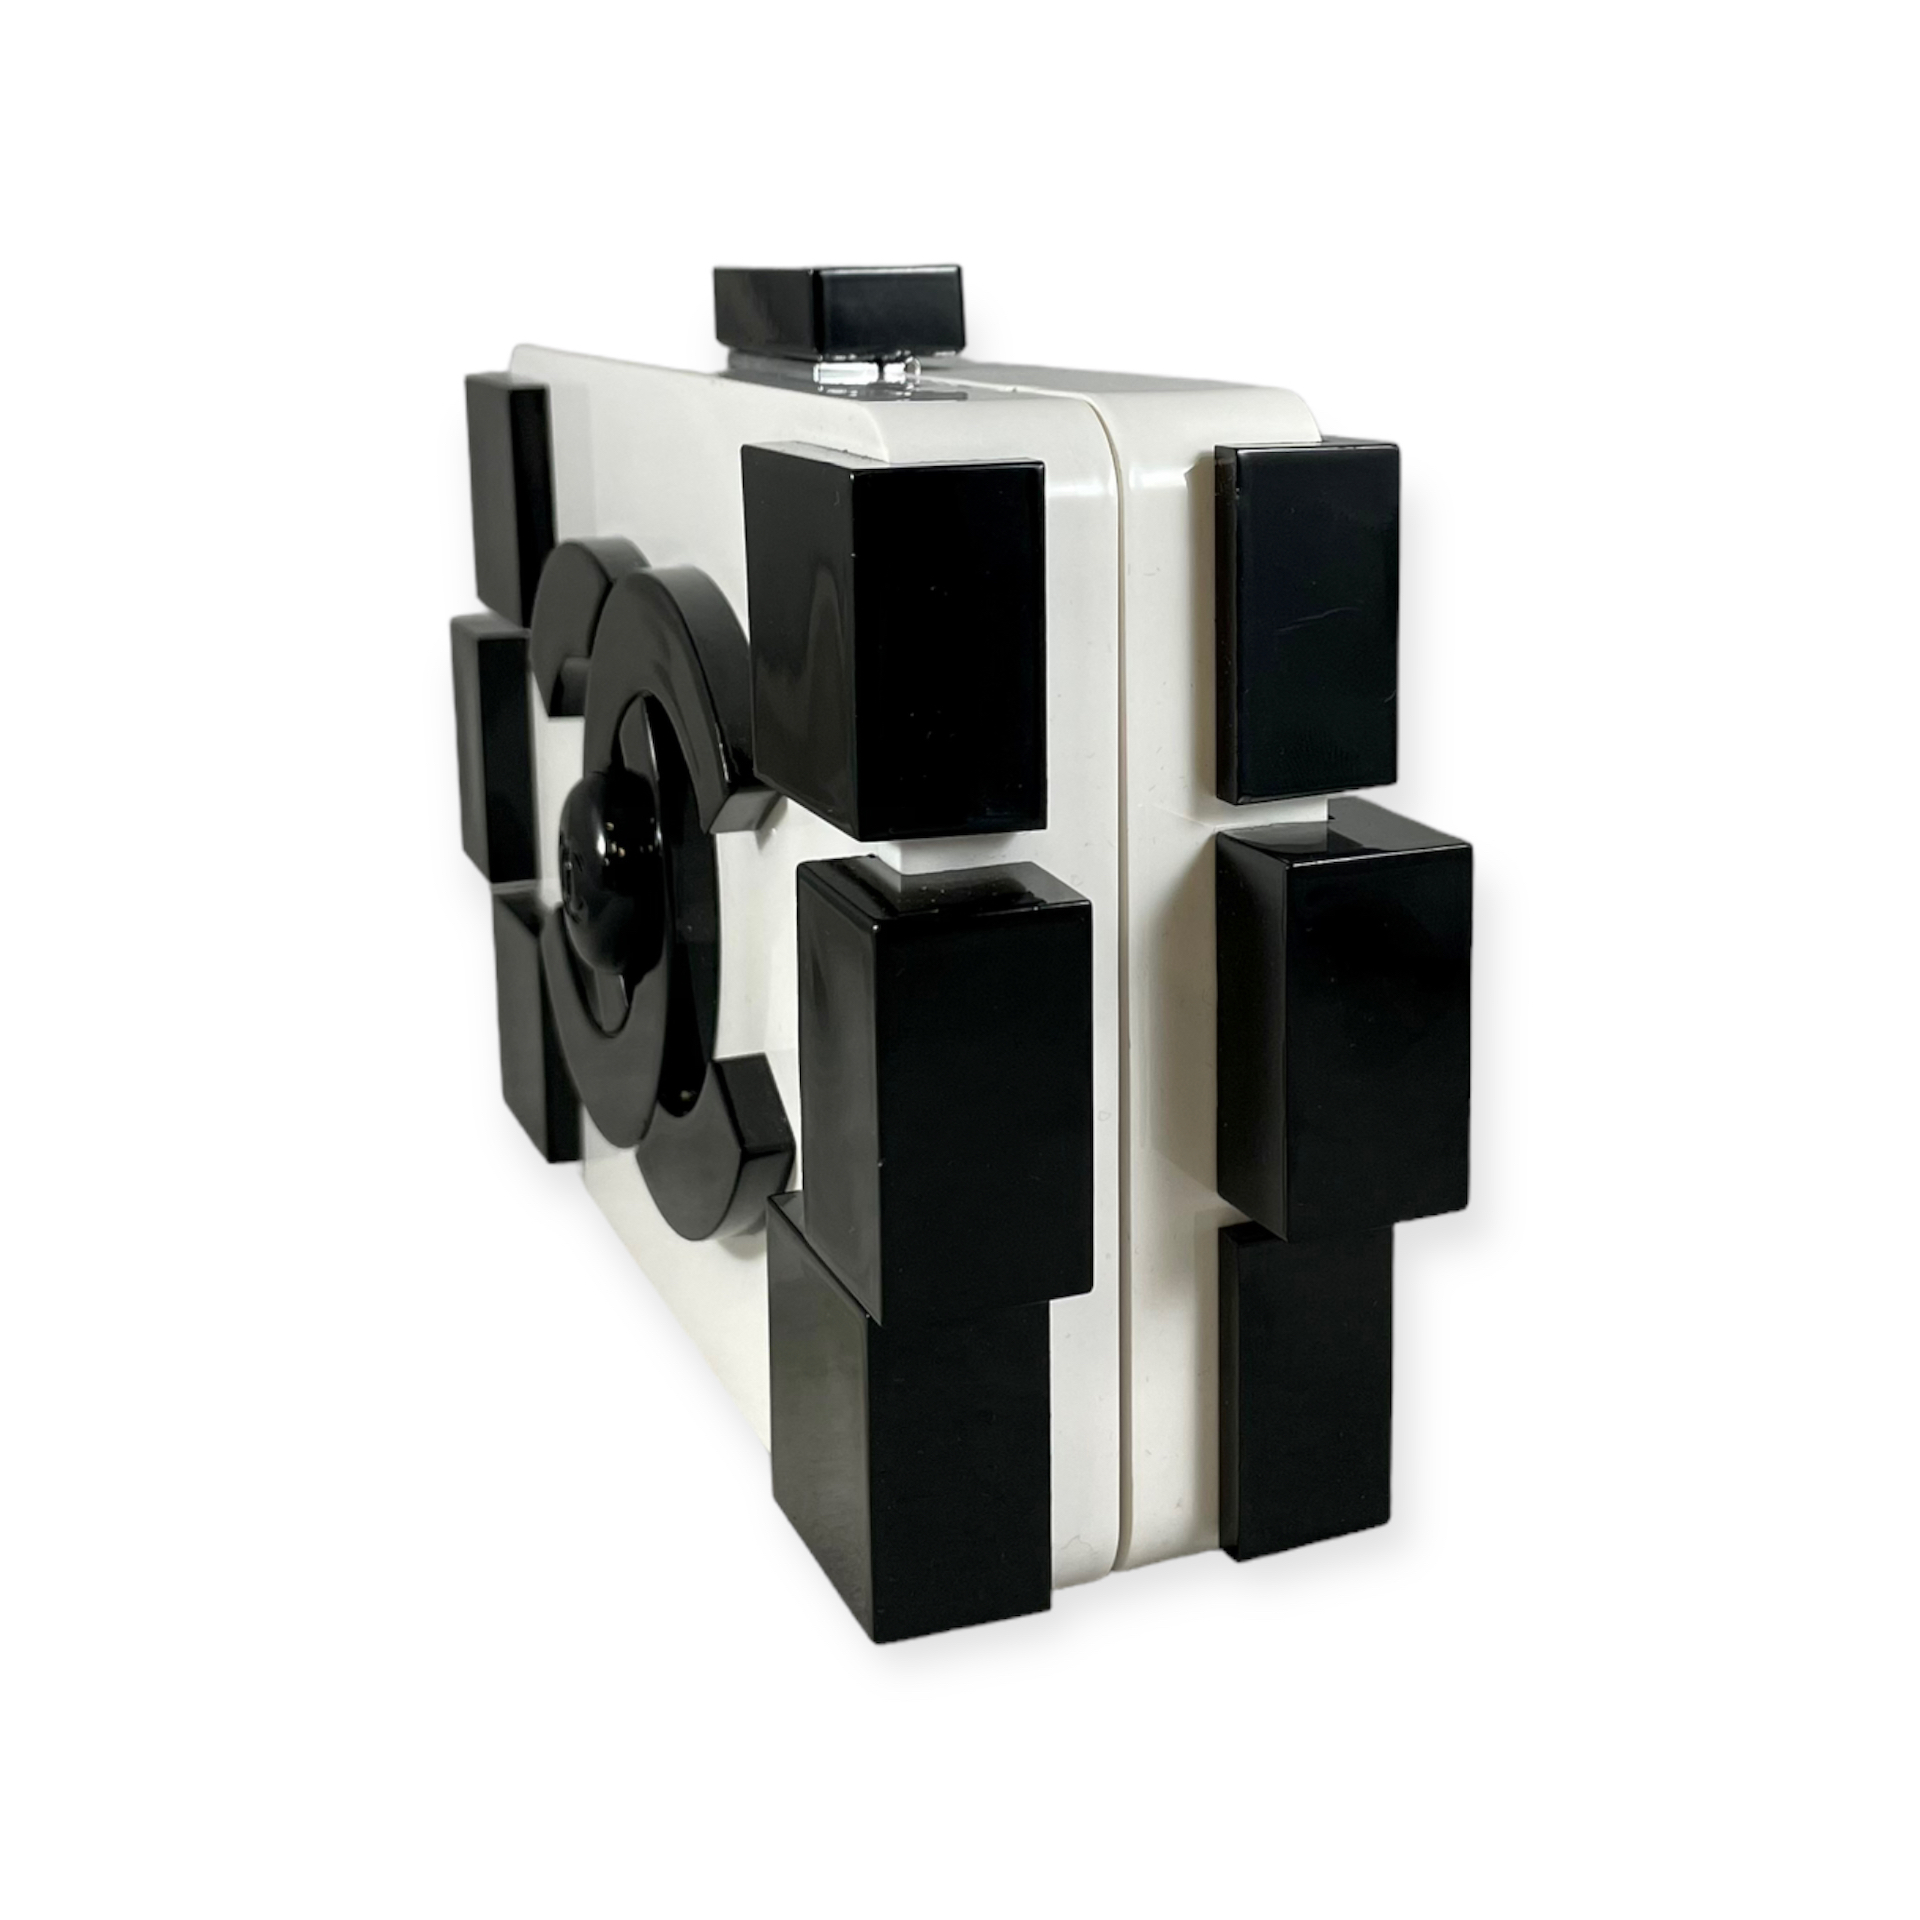 Chanel Lego Clutch in White / Black | MTYCI